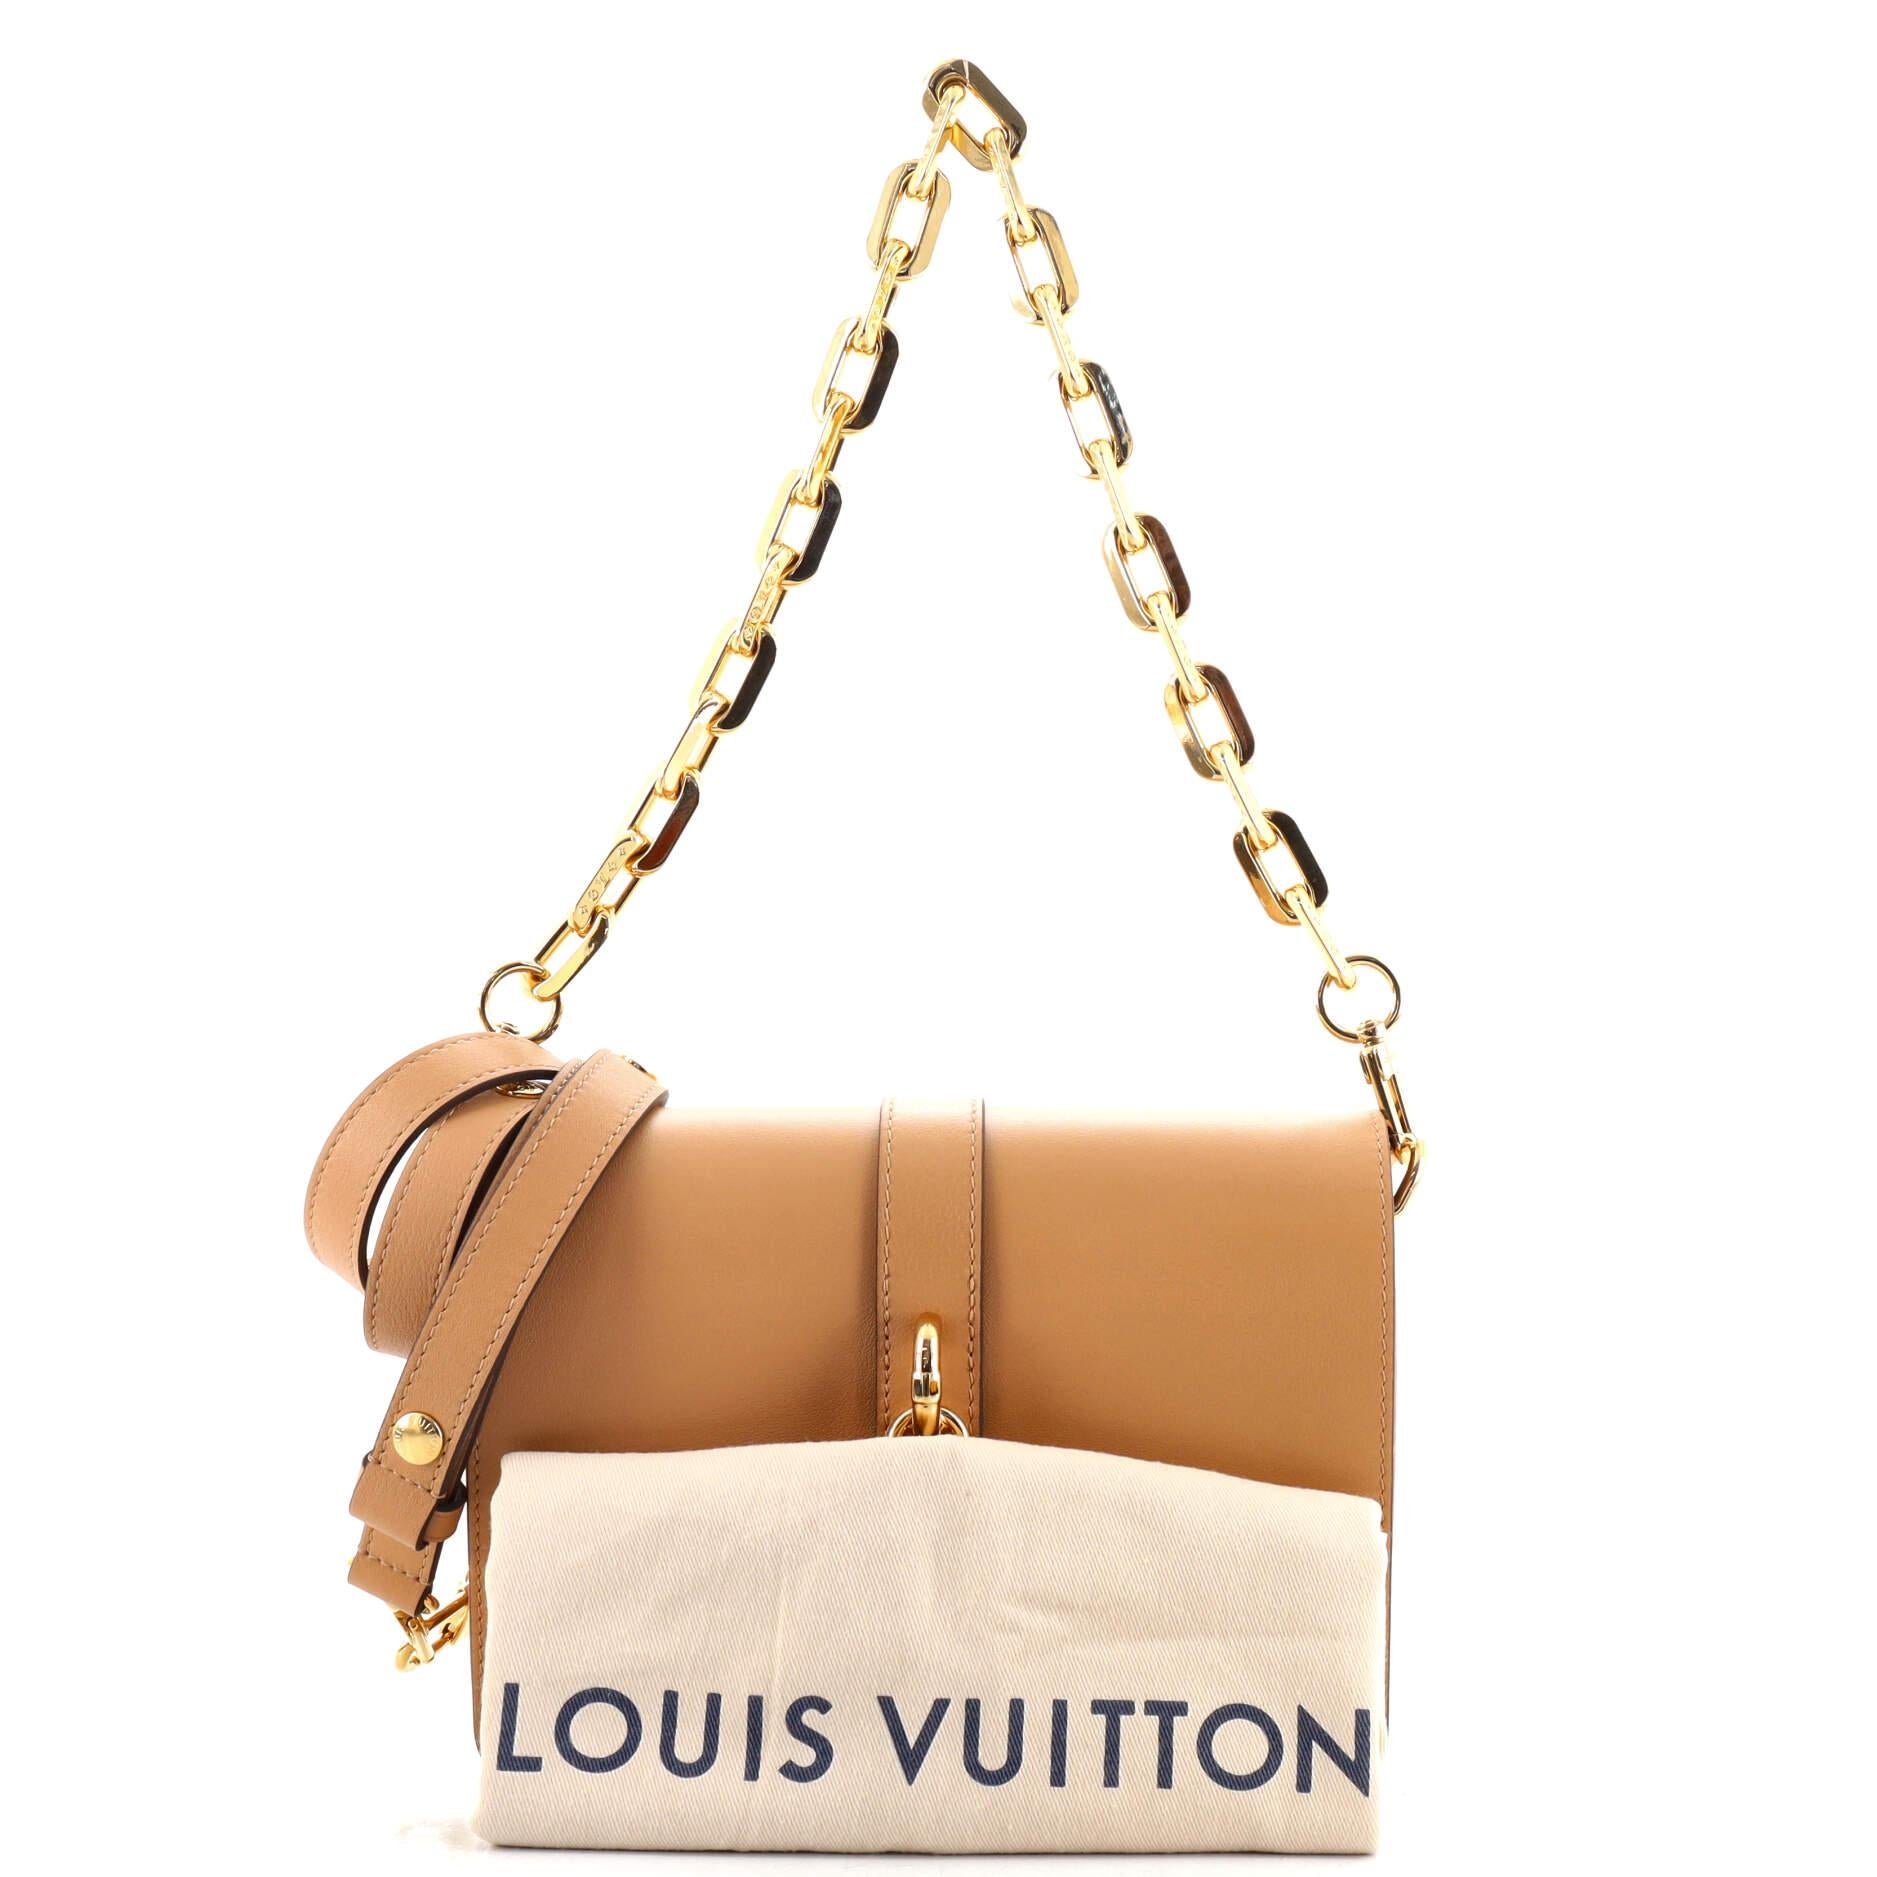 Louis Vuitton Rendez Vous - For Sale on 1stDibs